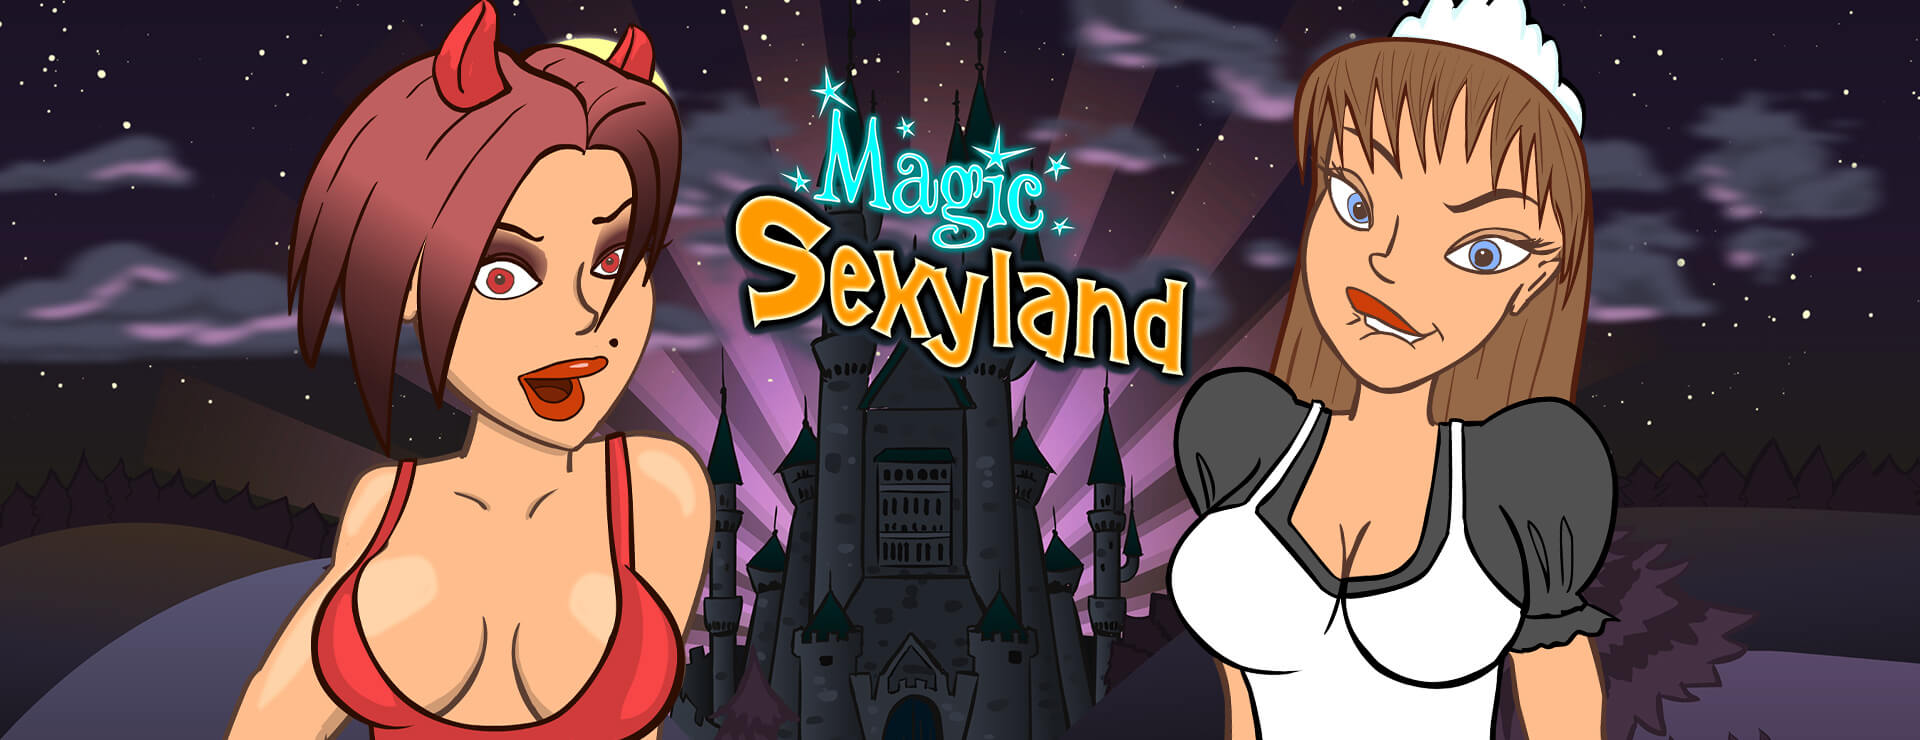 Magic Sexyland - Casual Juego